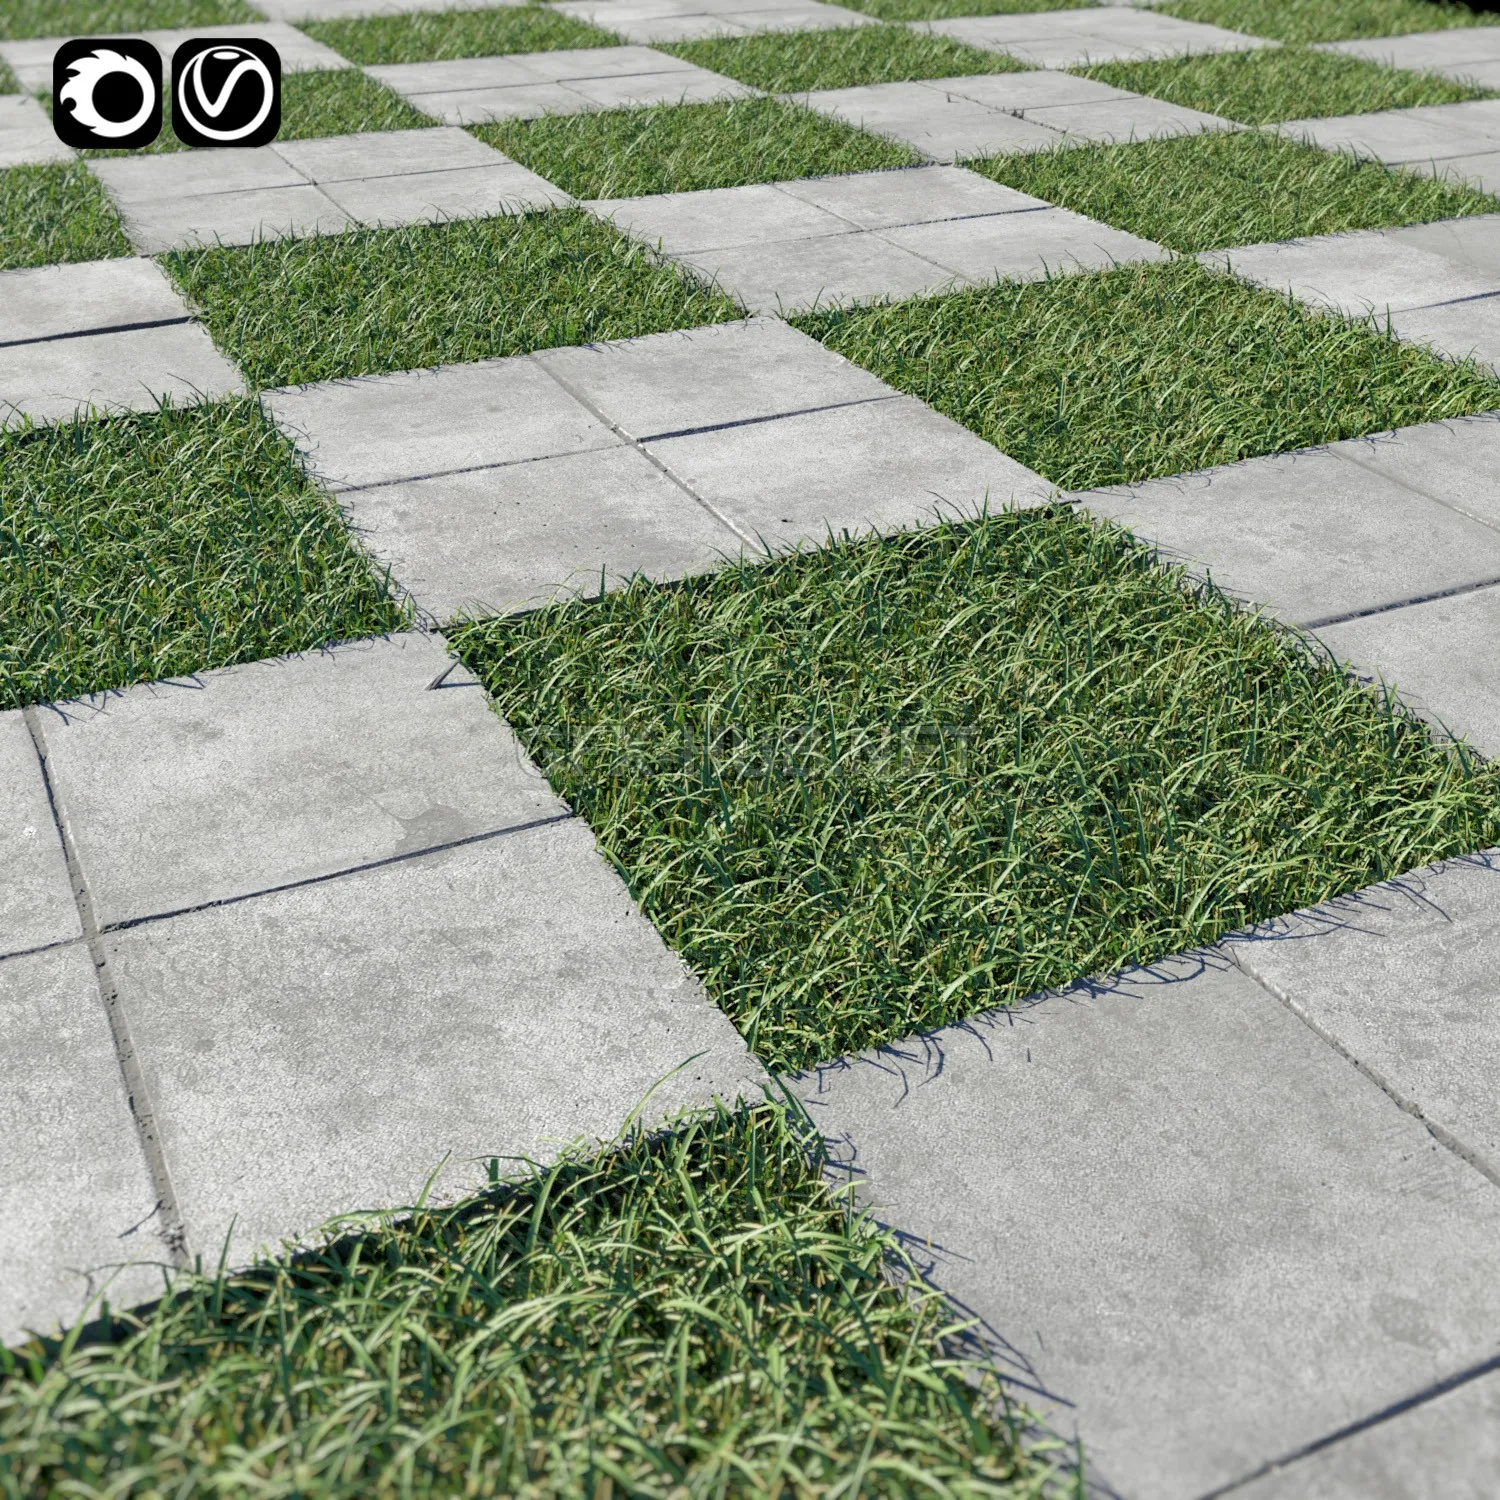 Decorative floor with grass – 212101